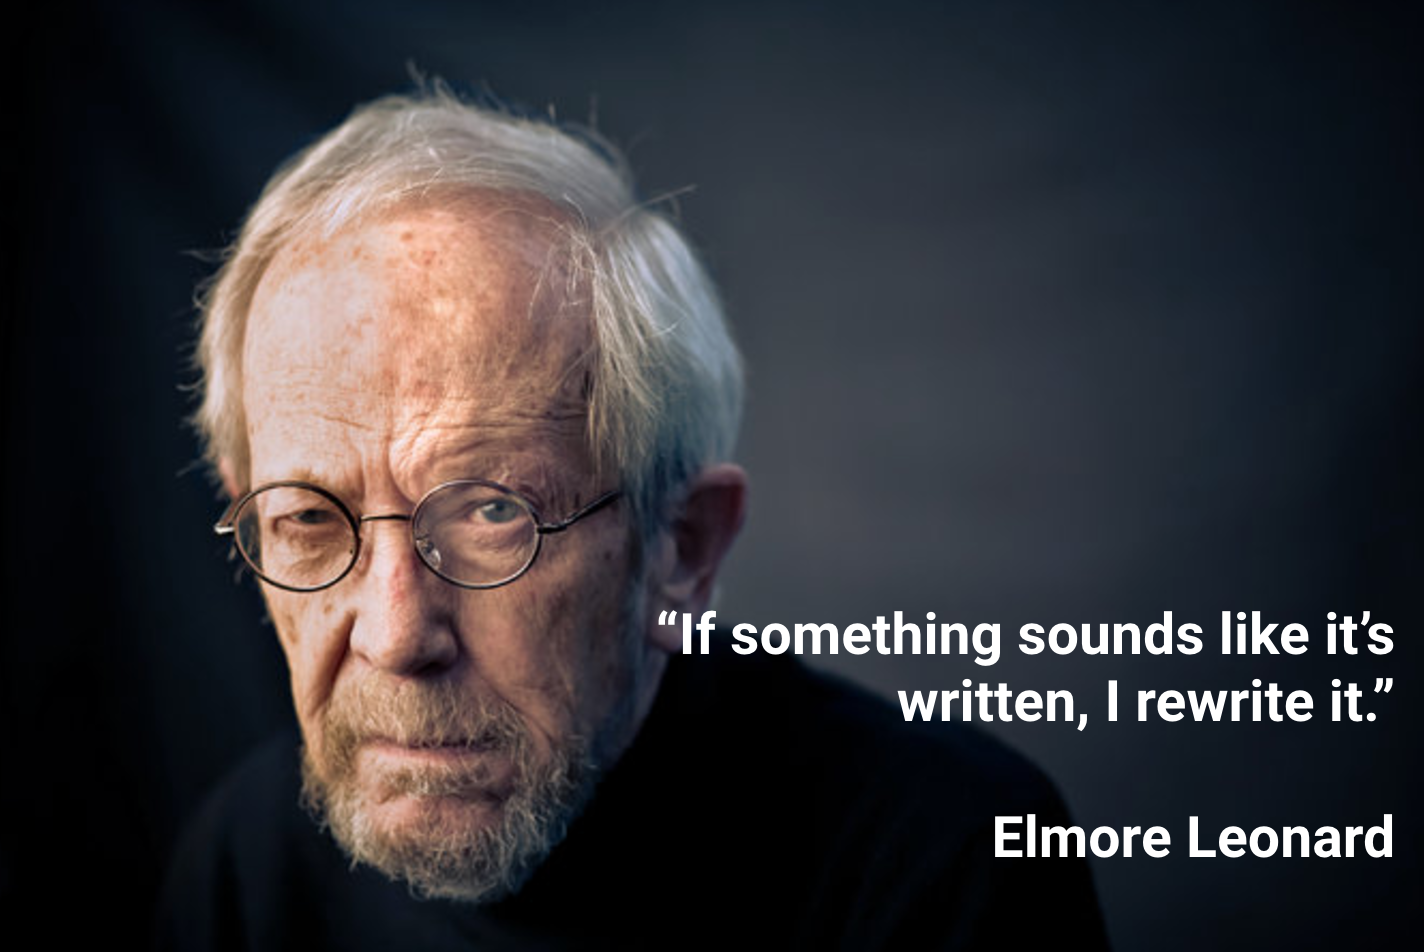 E.Leonard on writing dialogue